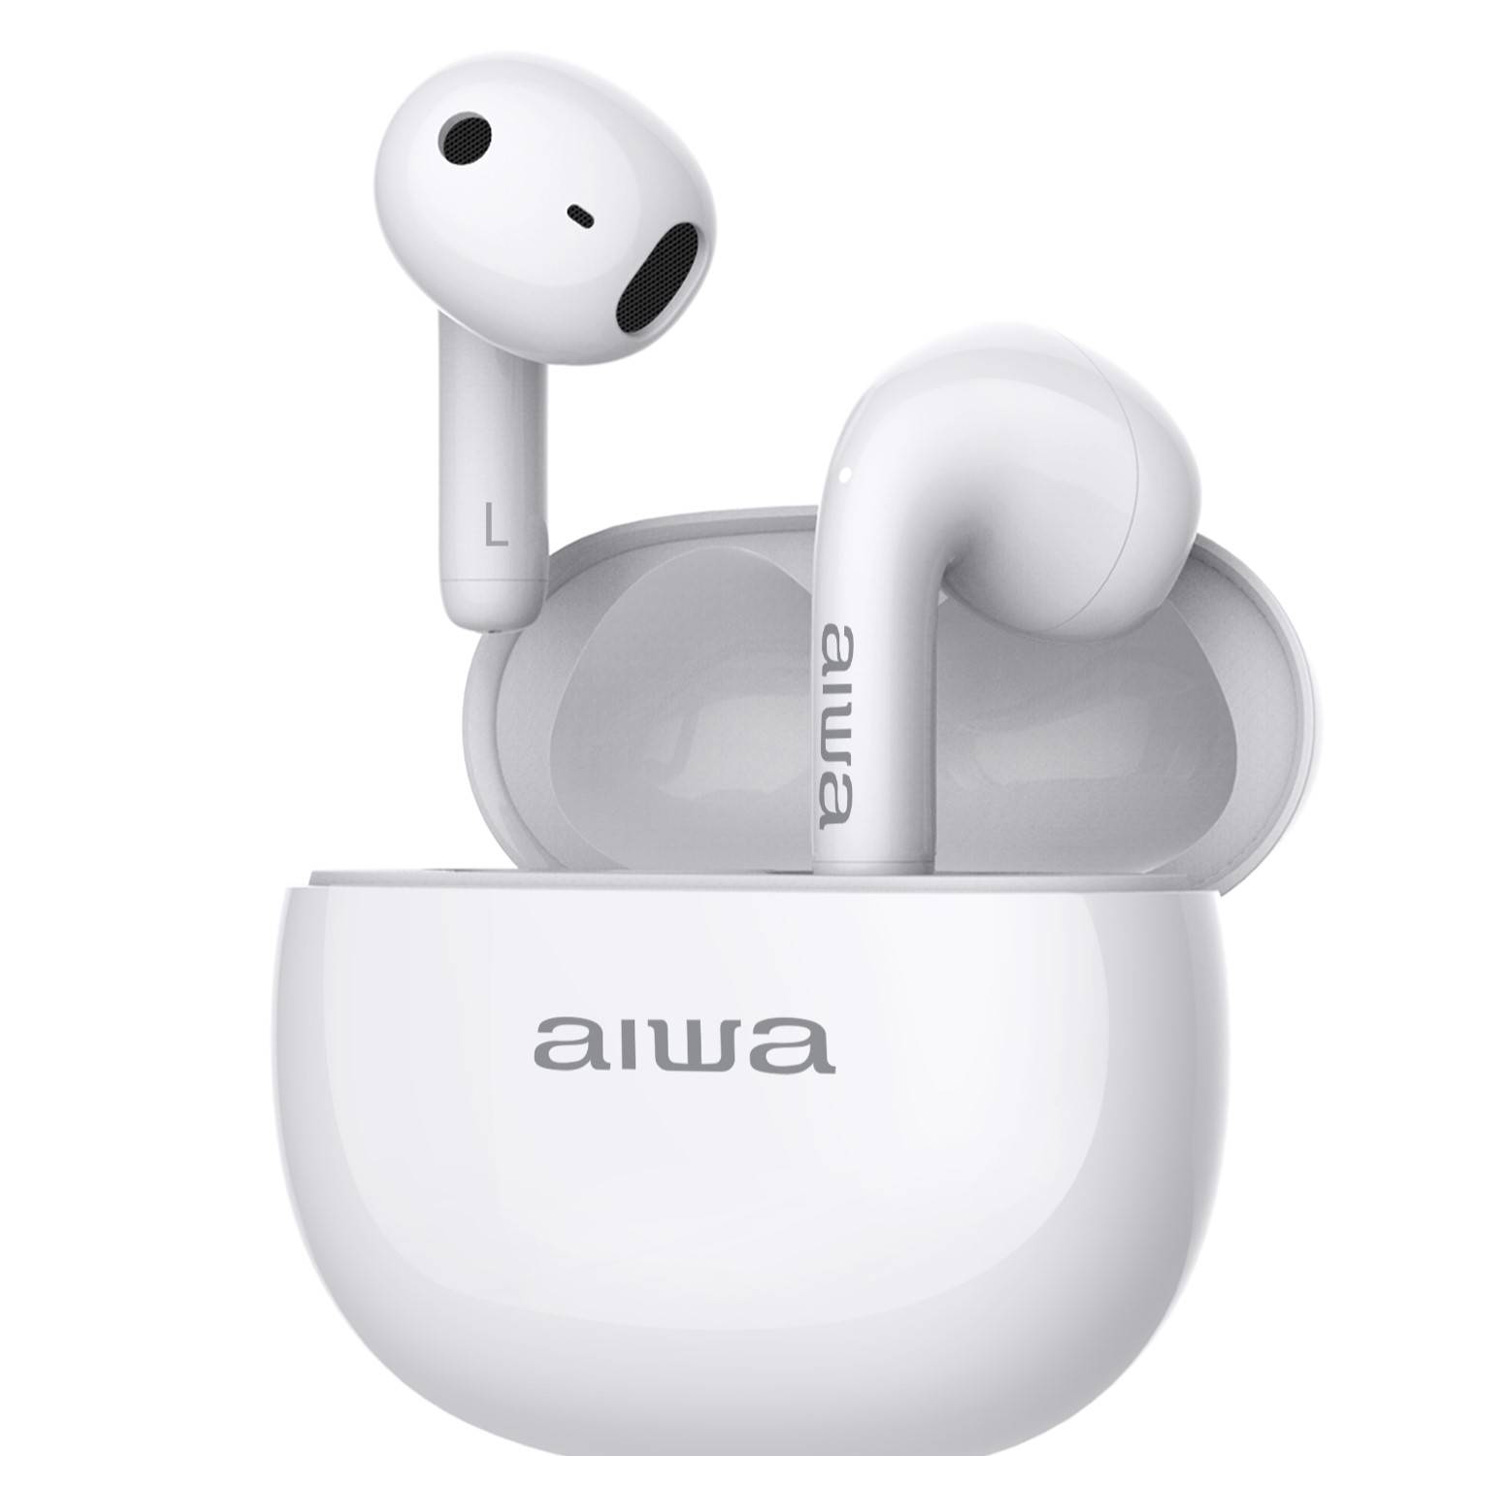 Fone de Ouvido Aiwa AW-TWSD8 / Bluetooth - Branco